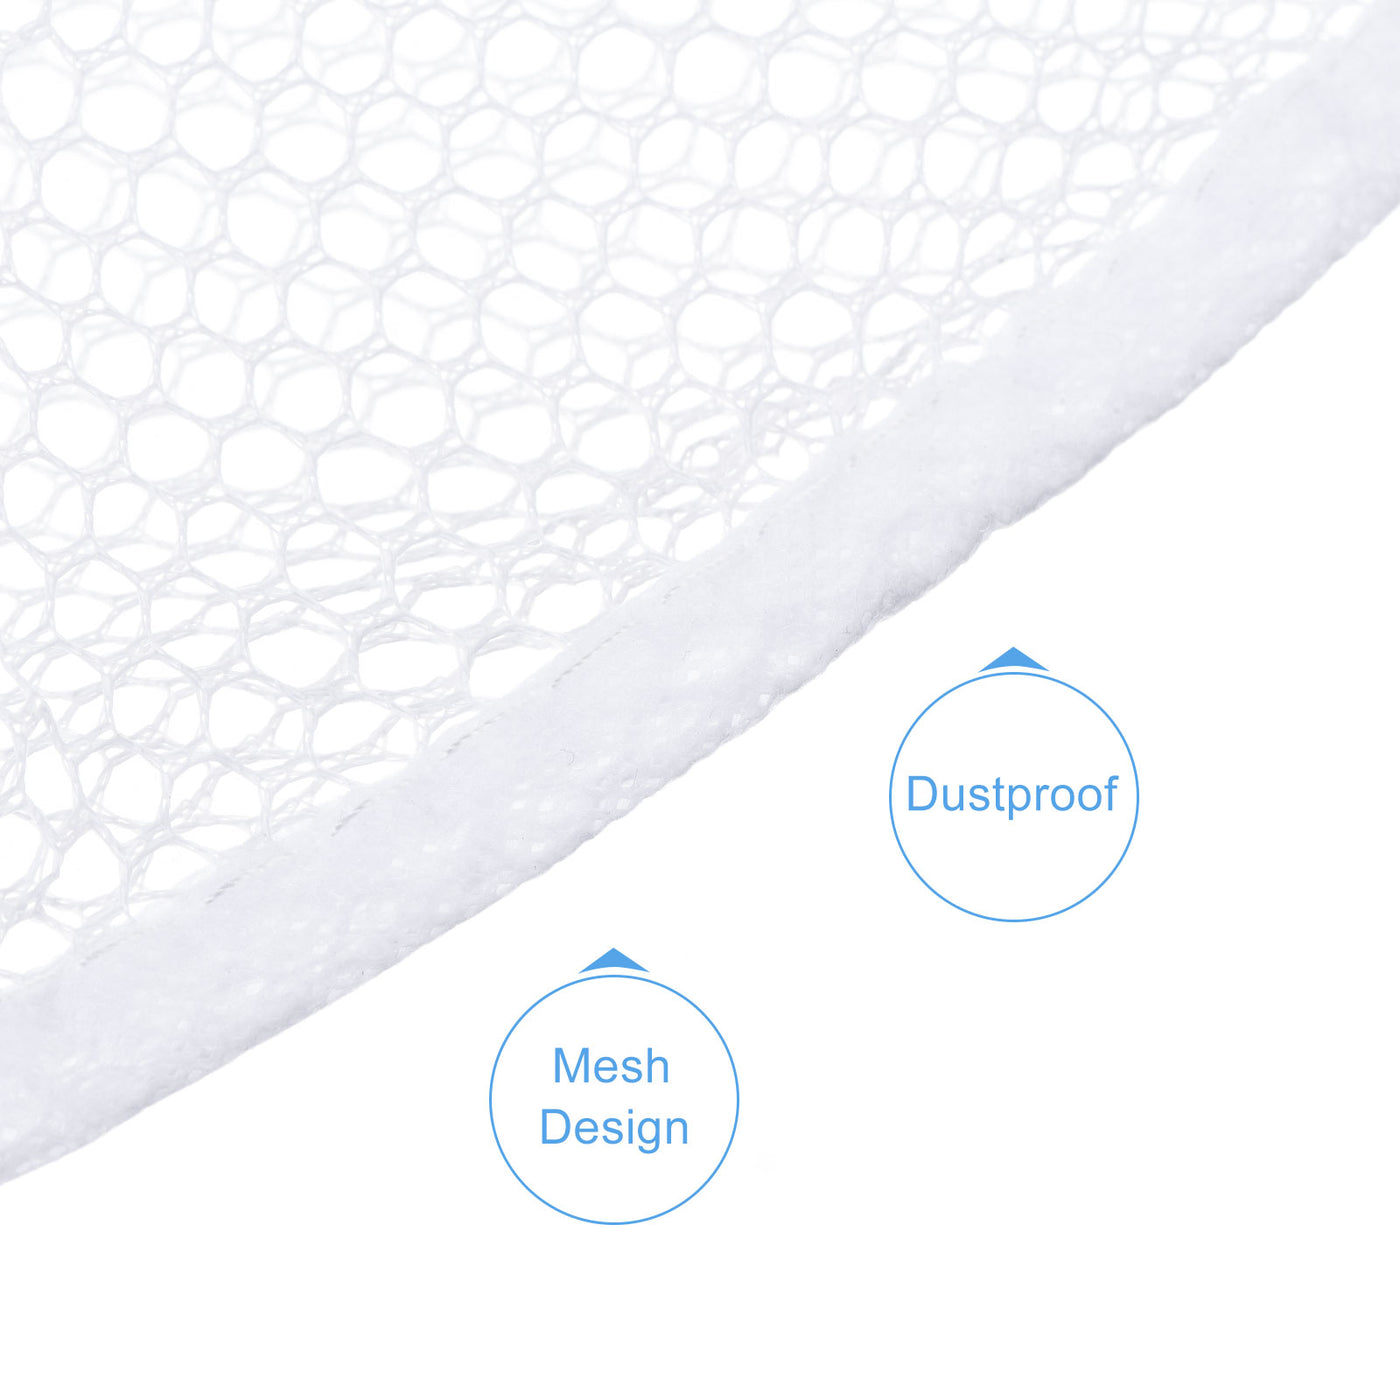 Harfington Fan Dust Cover, 350mm 14 Inch Washable Reusable Dustproof Mesh Protection Guard Net, White